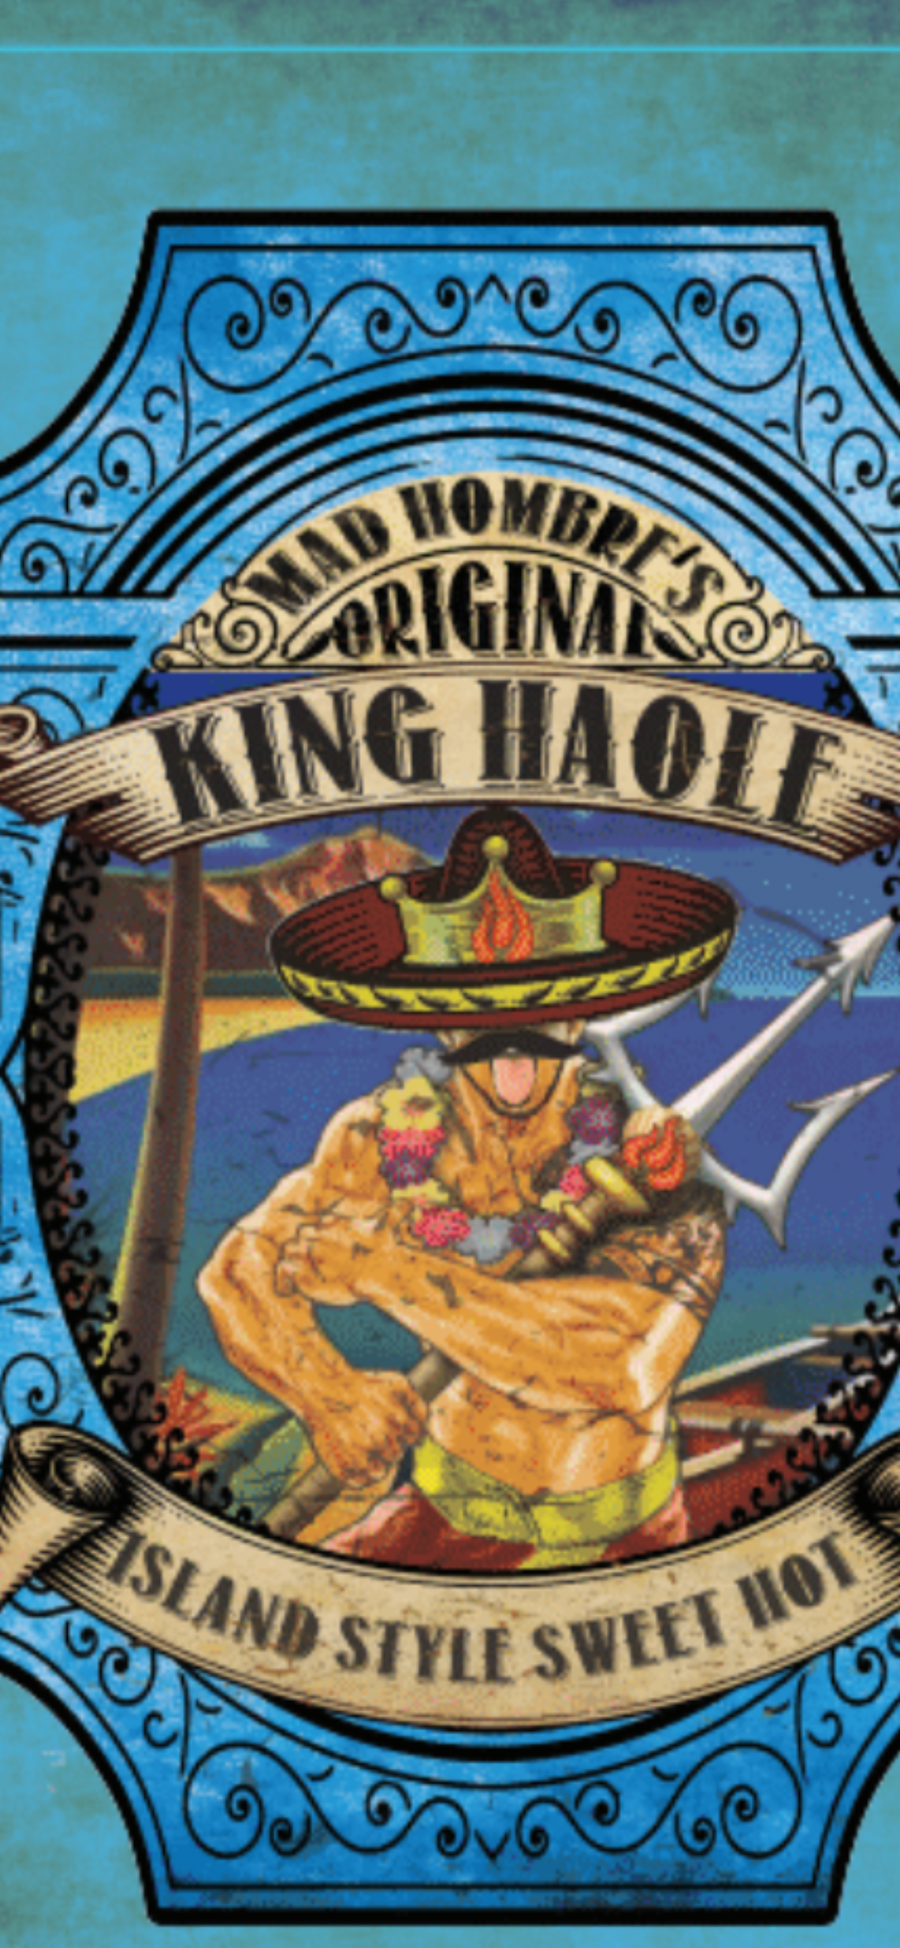 *King Haole -Medium (Mango-Pineapple-Habanero)